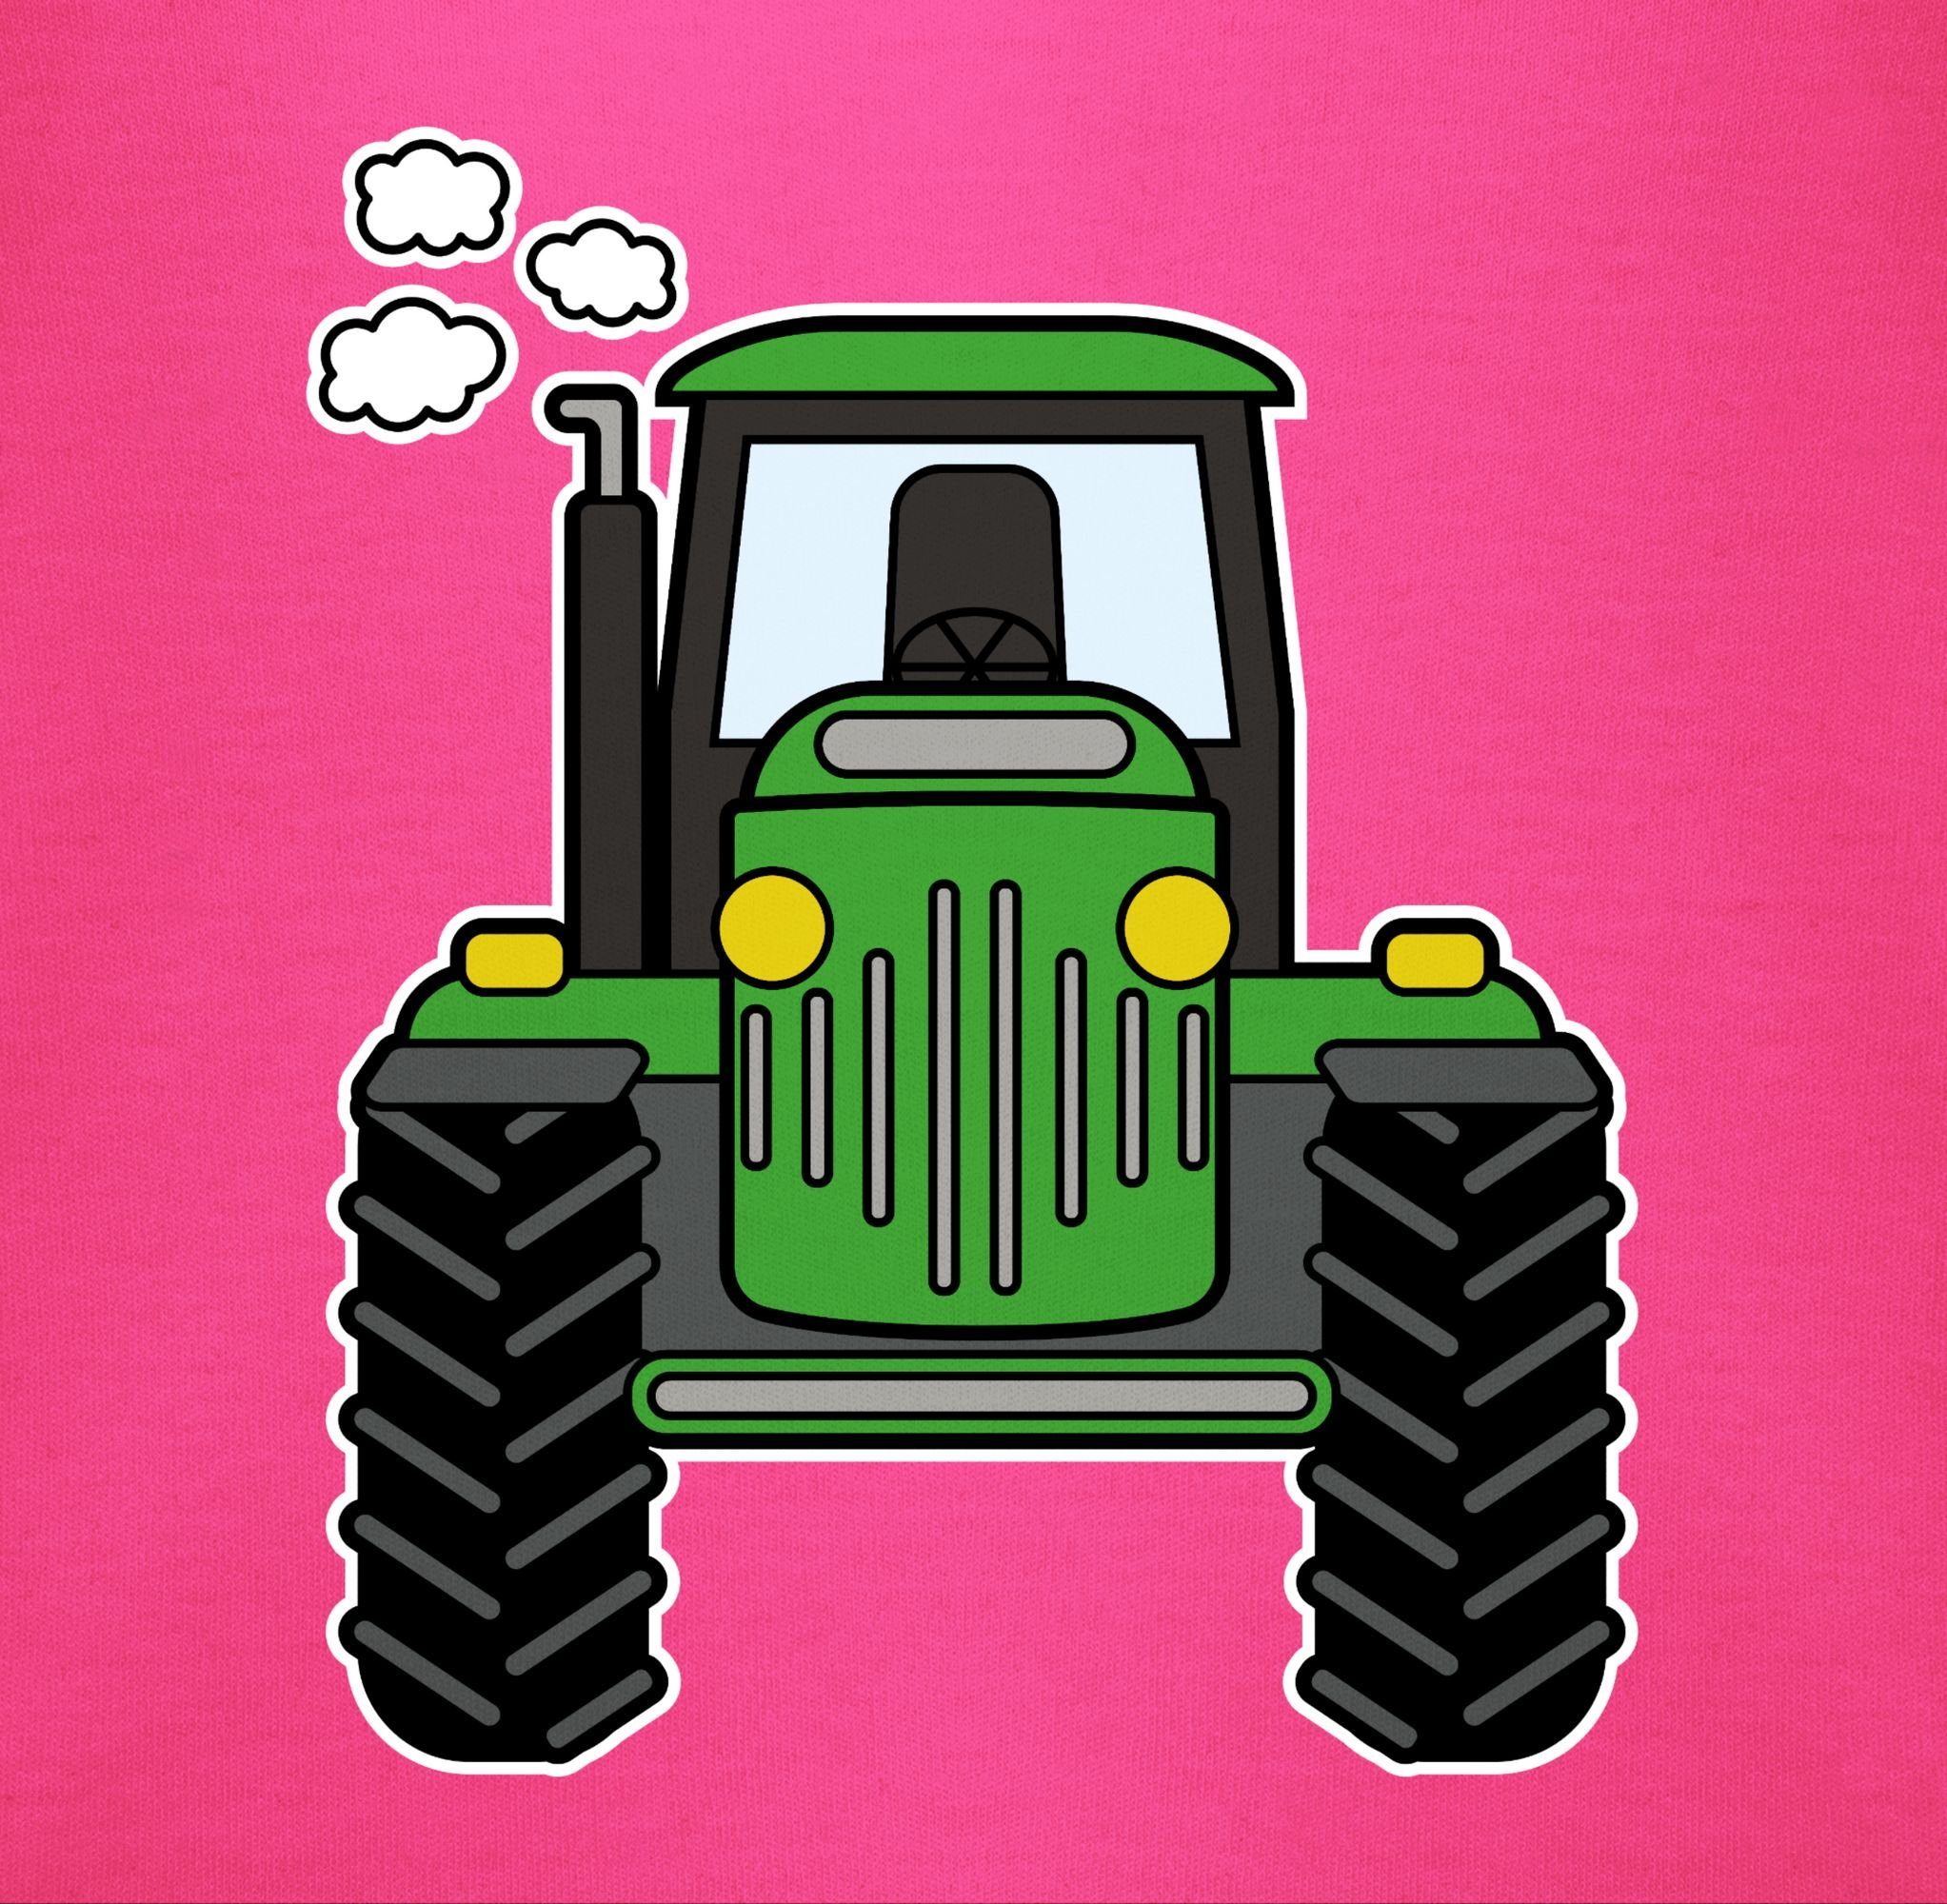 Geschenk Landwirtschaft Shirtracer Landwirte Fuchsia Shirtbody Traktor Bauern 1 Trecker Bulldog Traktor